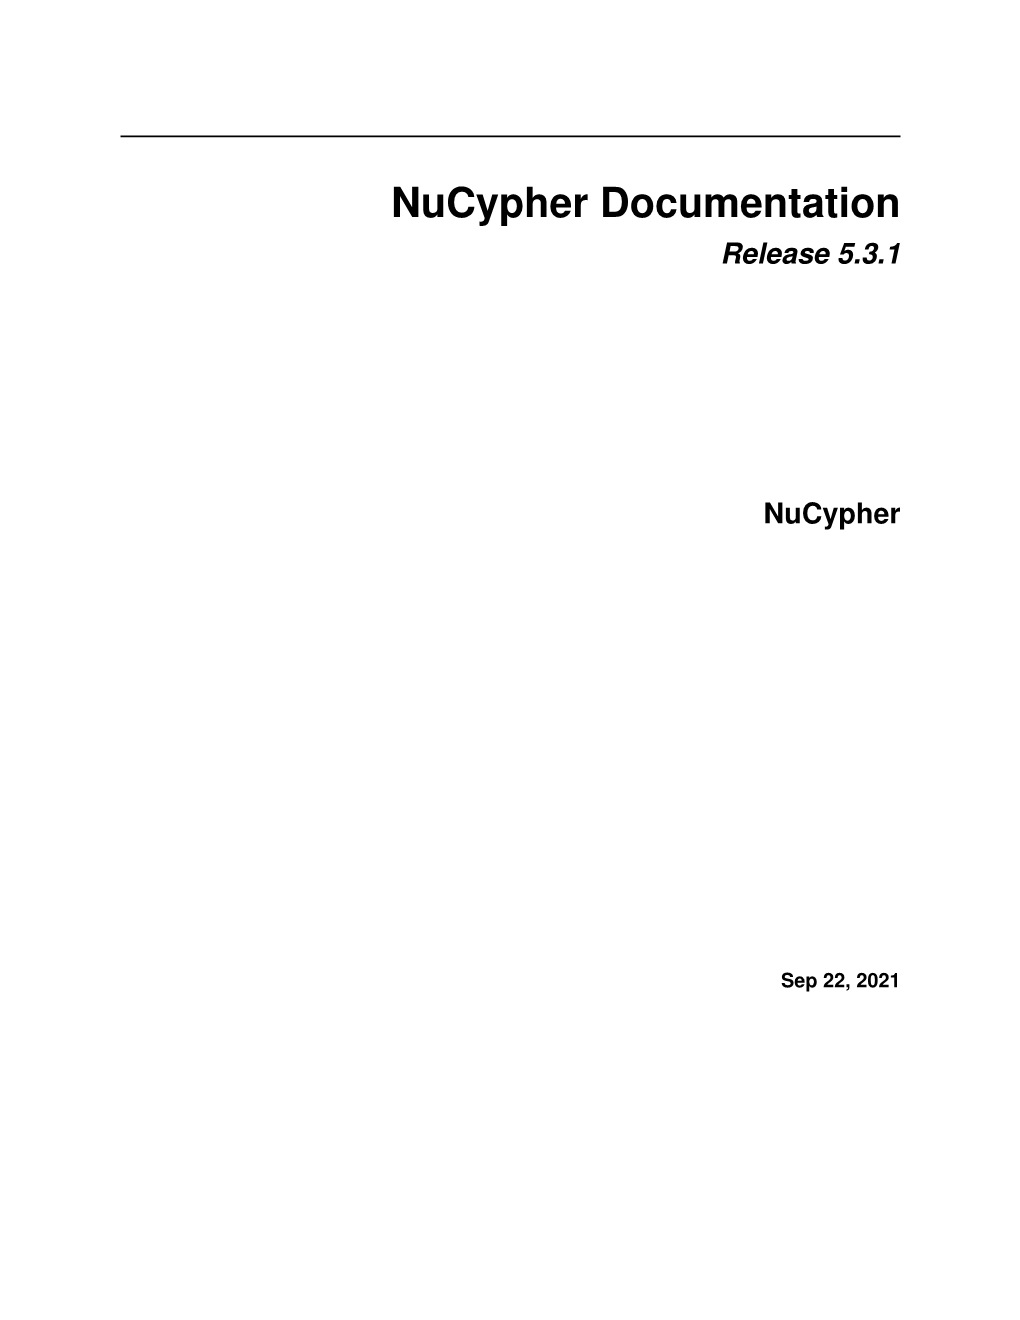 Nucypher Documentation Release 5.3.1